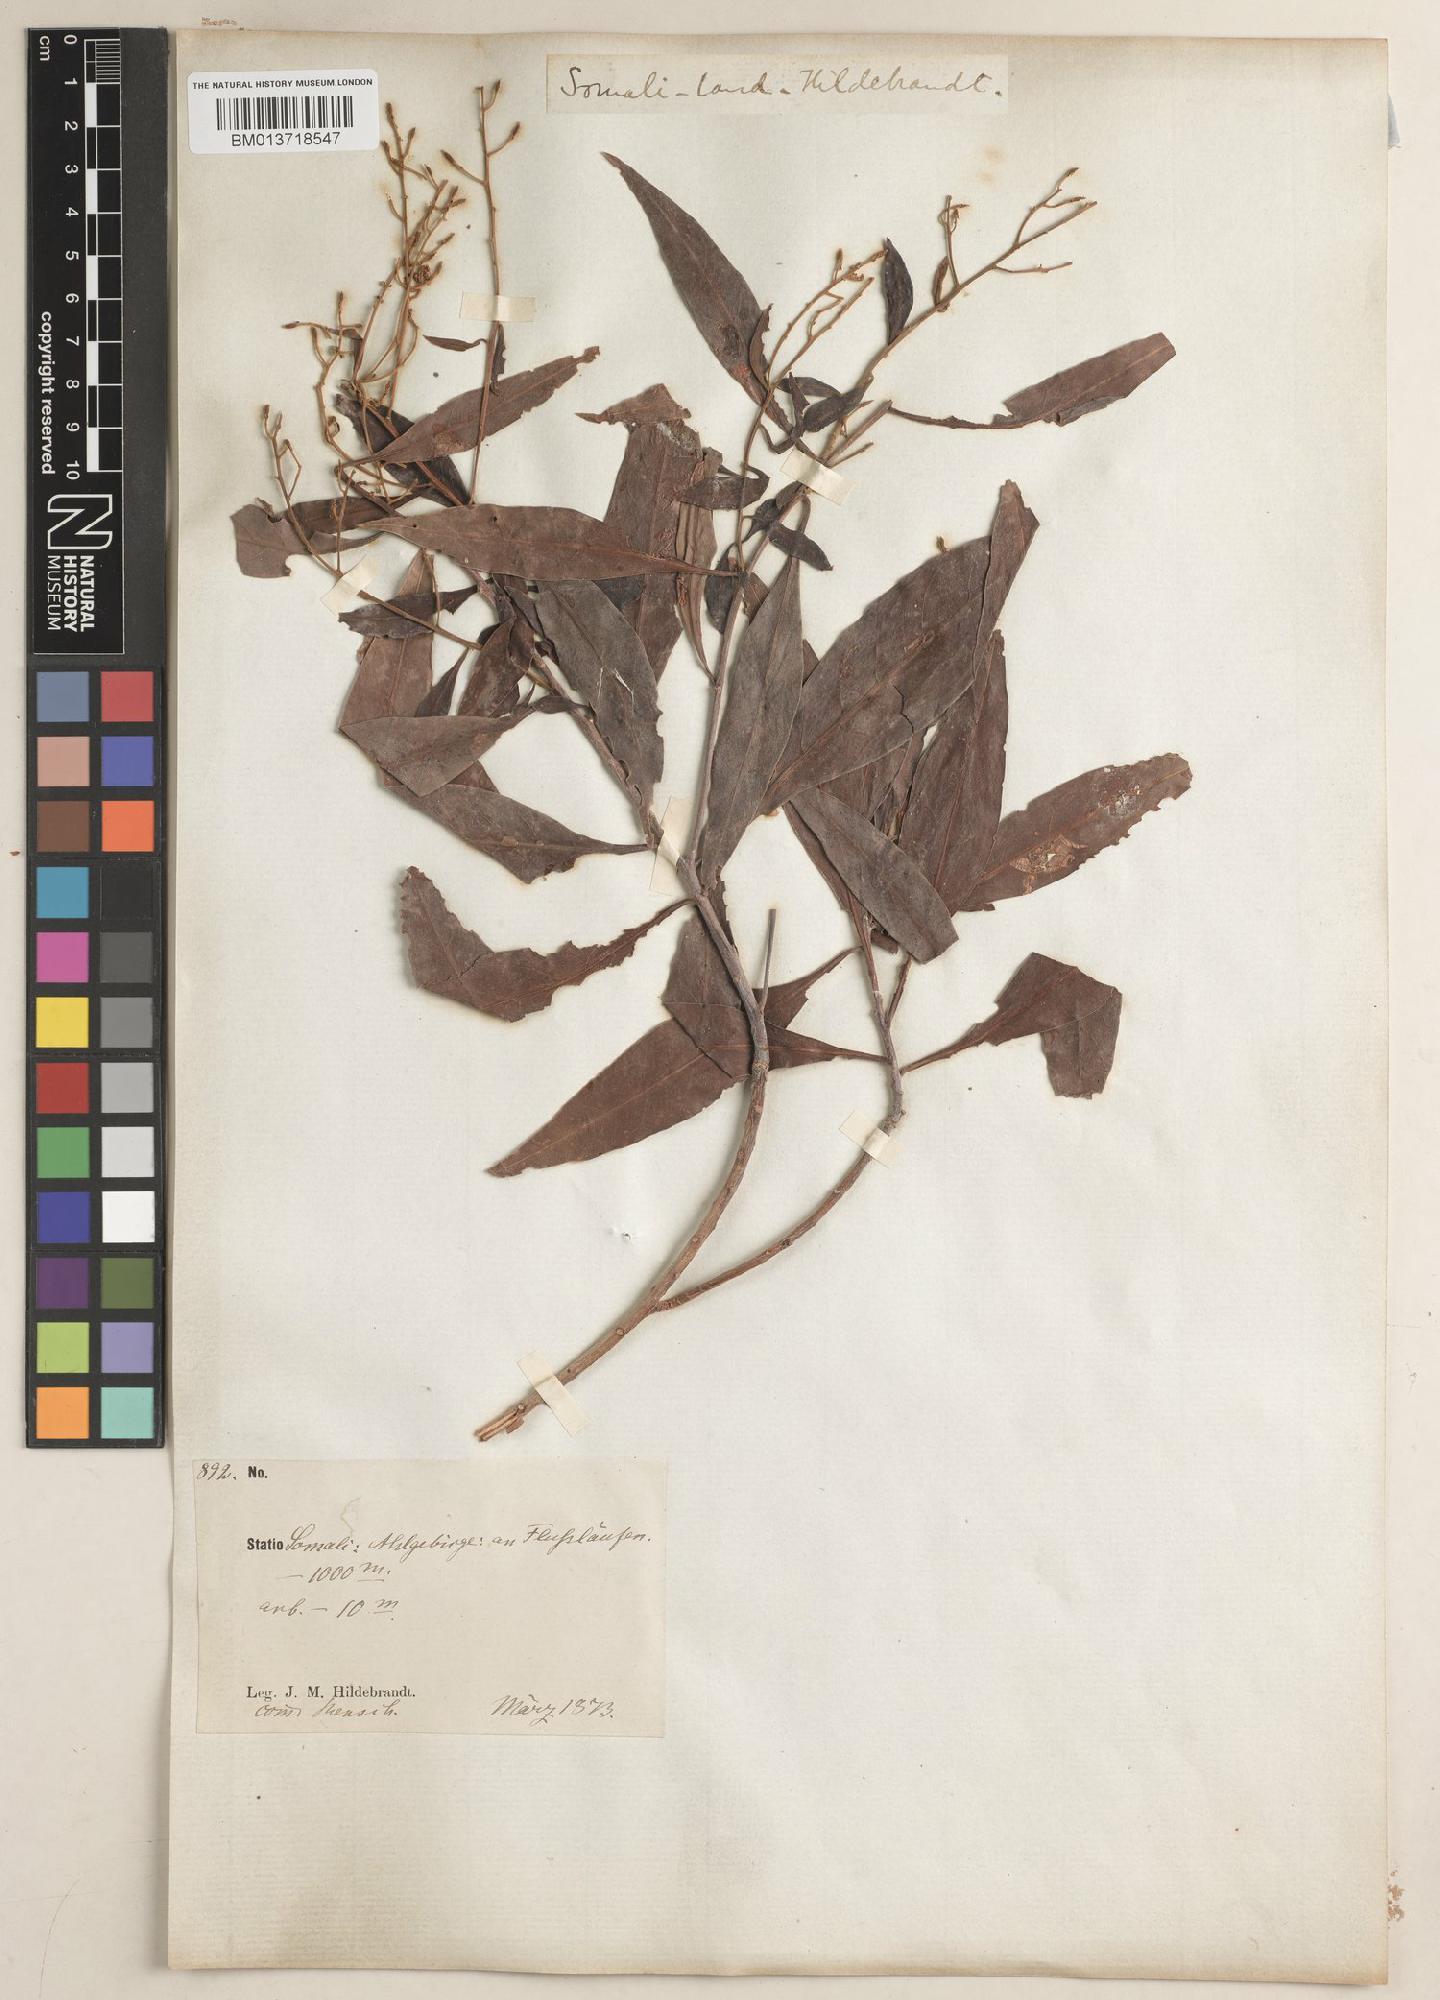 To NHMUK collection (Conocarpus lancifolius Engl.; ISOSYNTYPE; NHMUK:ecatalogue:9092043)